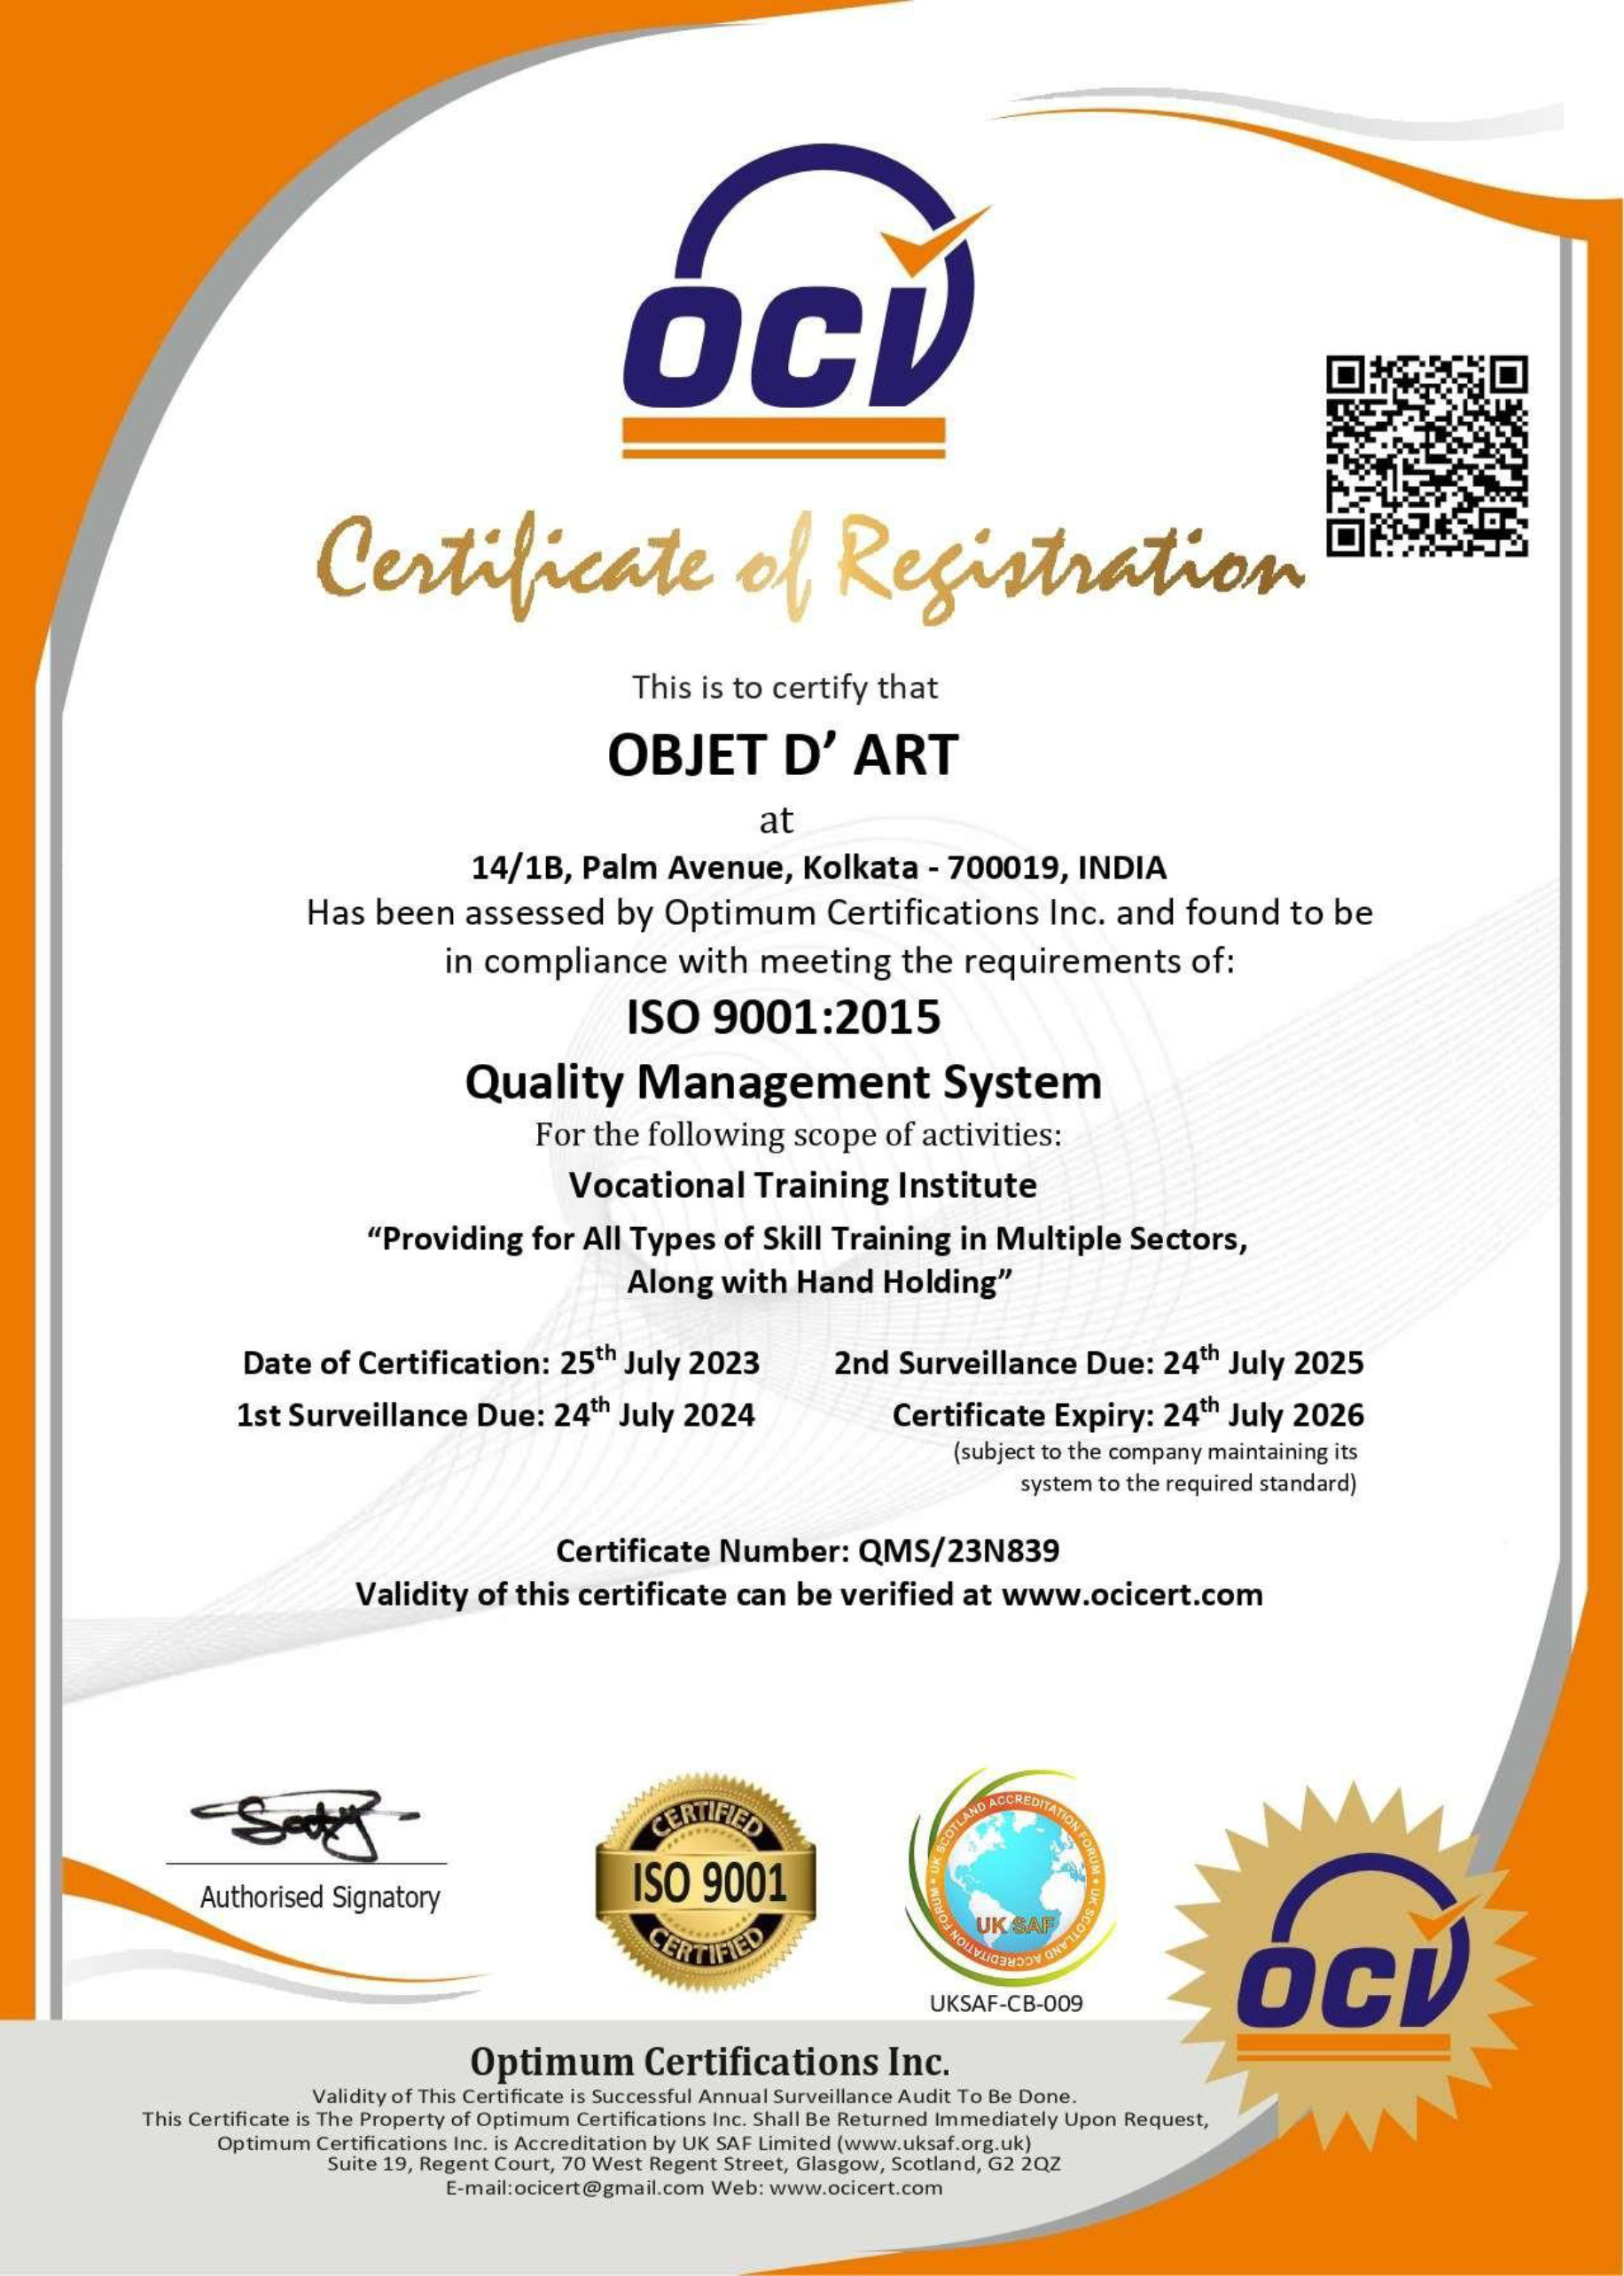 ISO Certified Institute